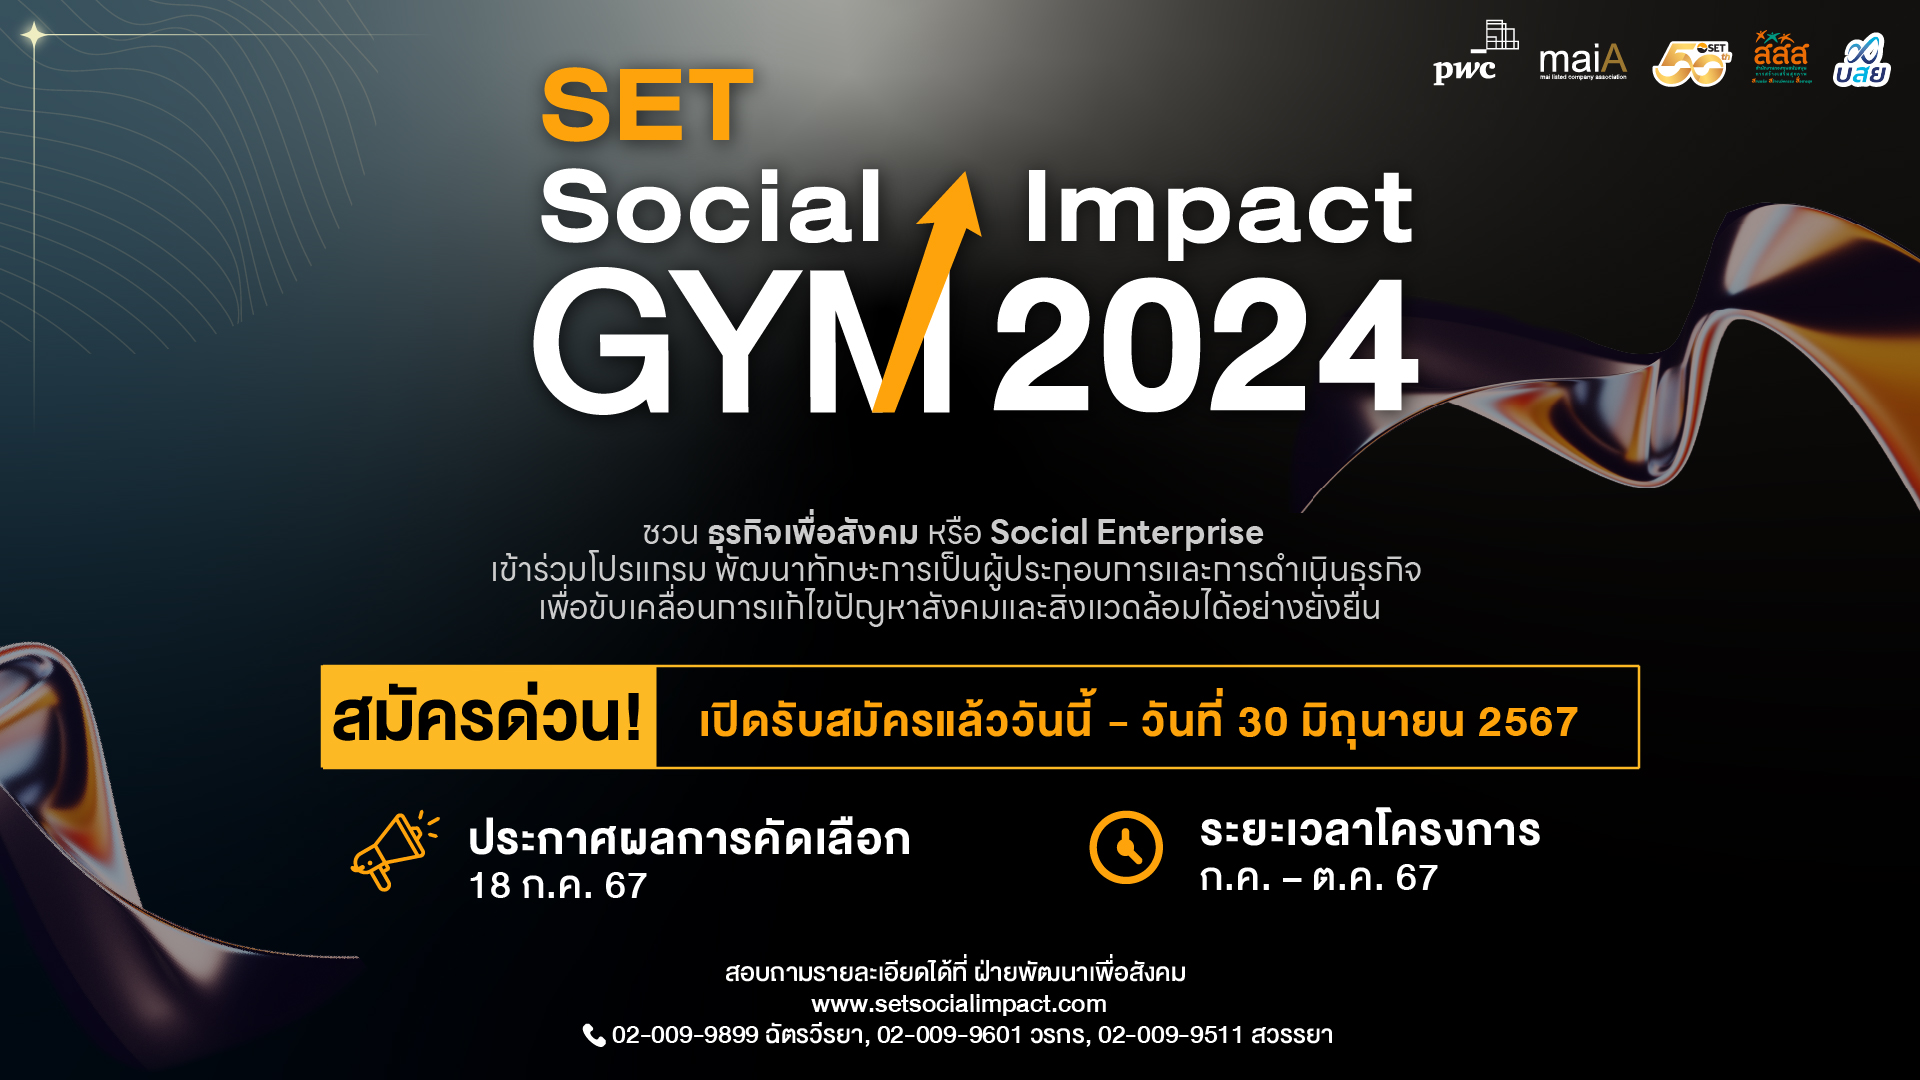 Social Impact GYM 2024